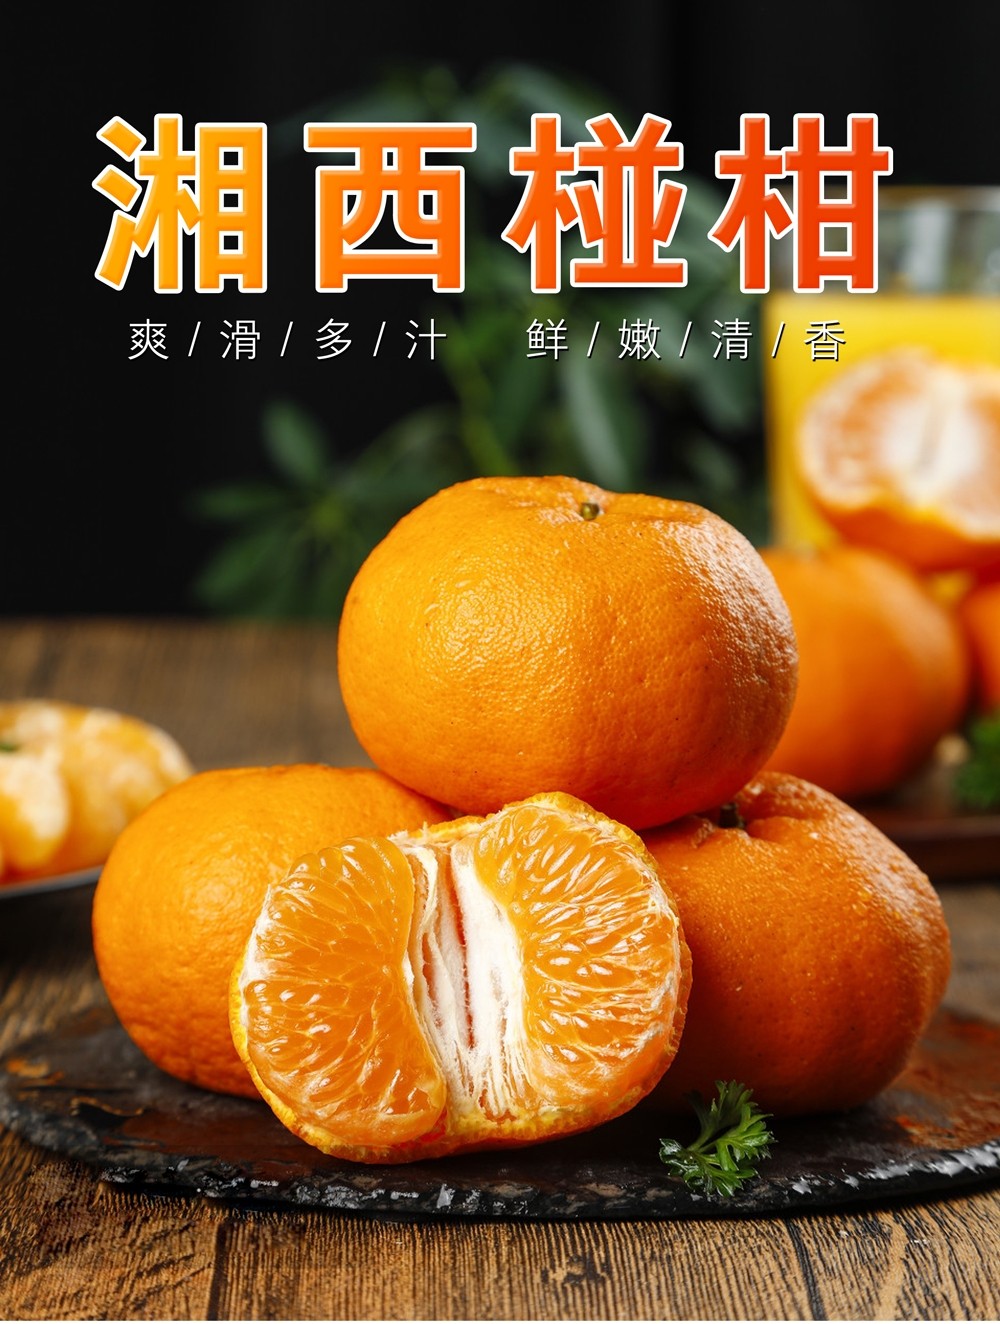 xiaobofarm湖南高山椪柑新鲜橘子芦柑净重5斤